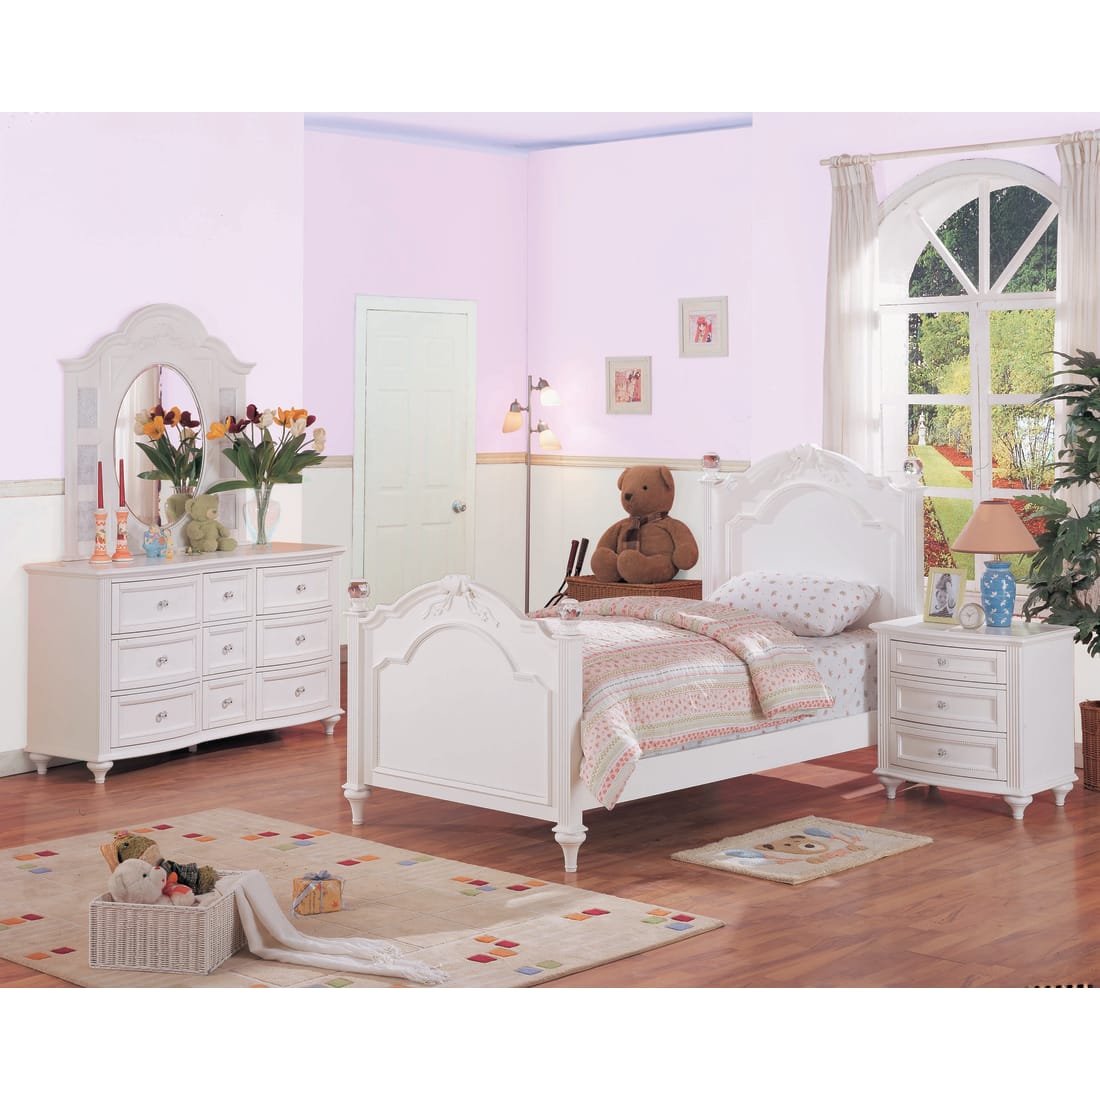 Princess Bedroom - Bed, Dresser & Mirror - Full